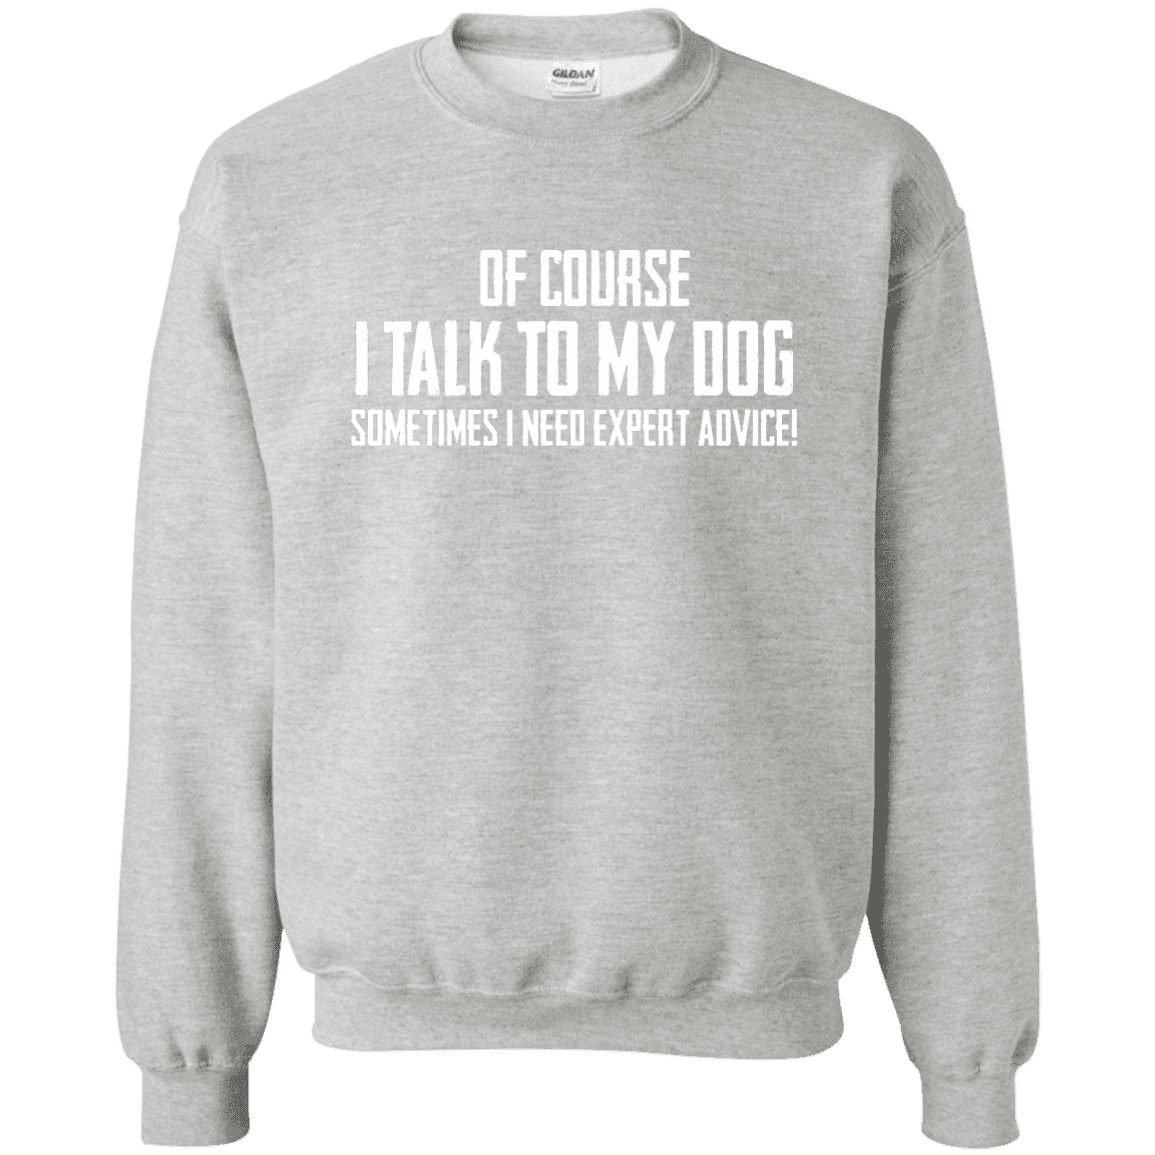 Of Course I Talk To My Dog - Sweatshirt.